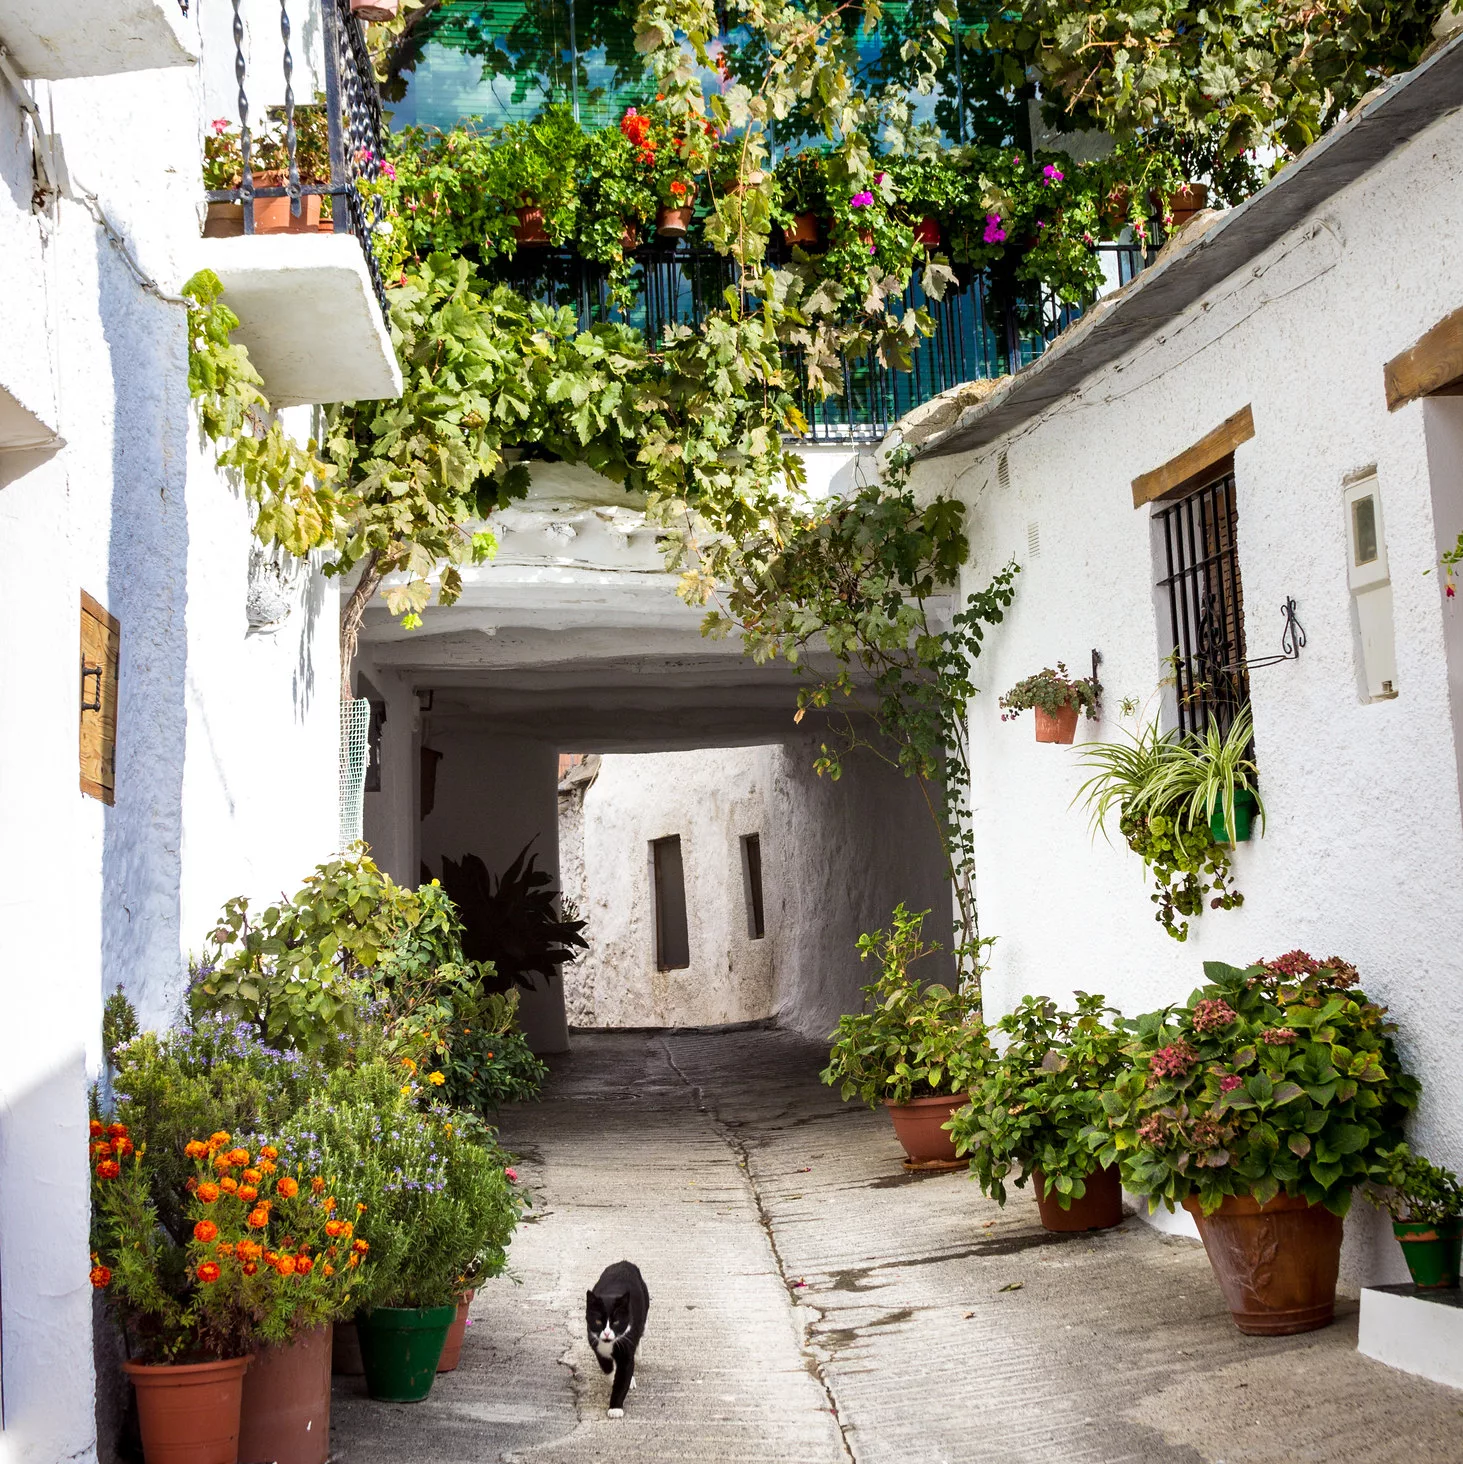 Las Alpujarras, the White Villages of Andalusia